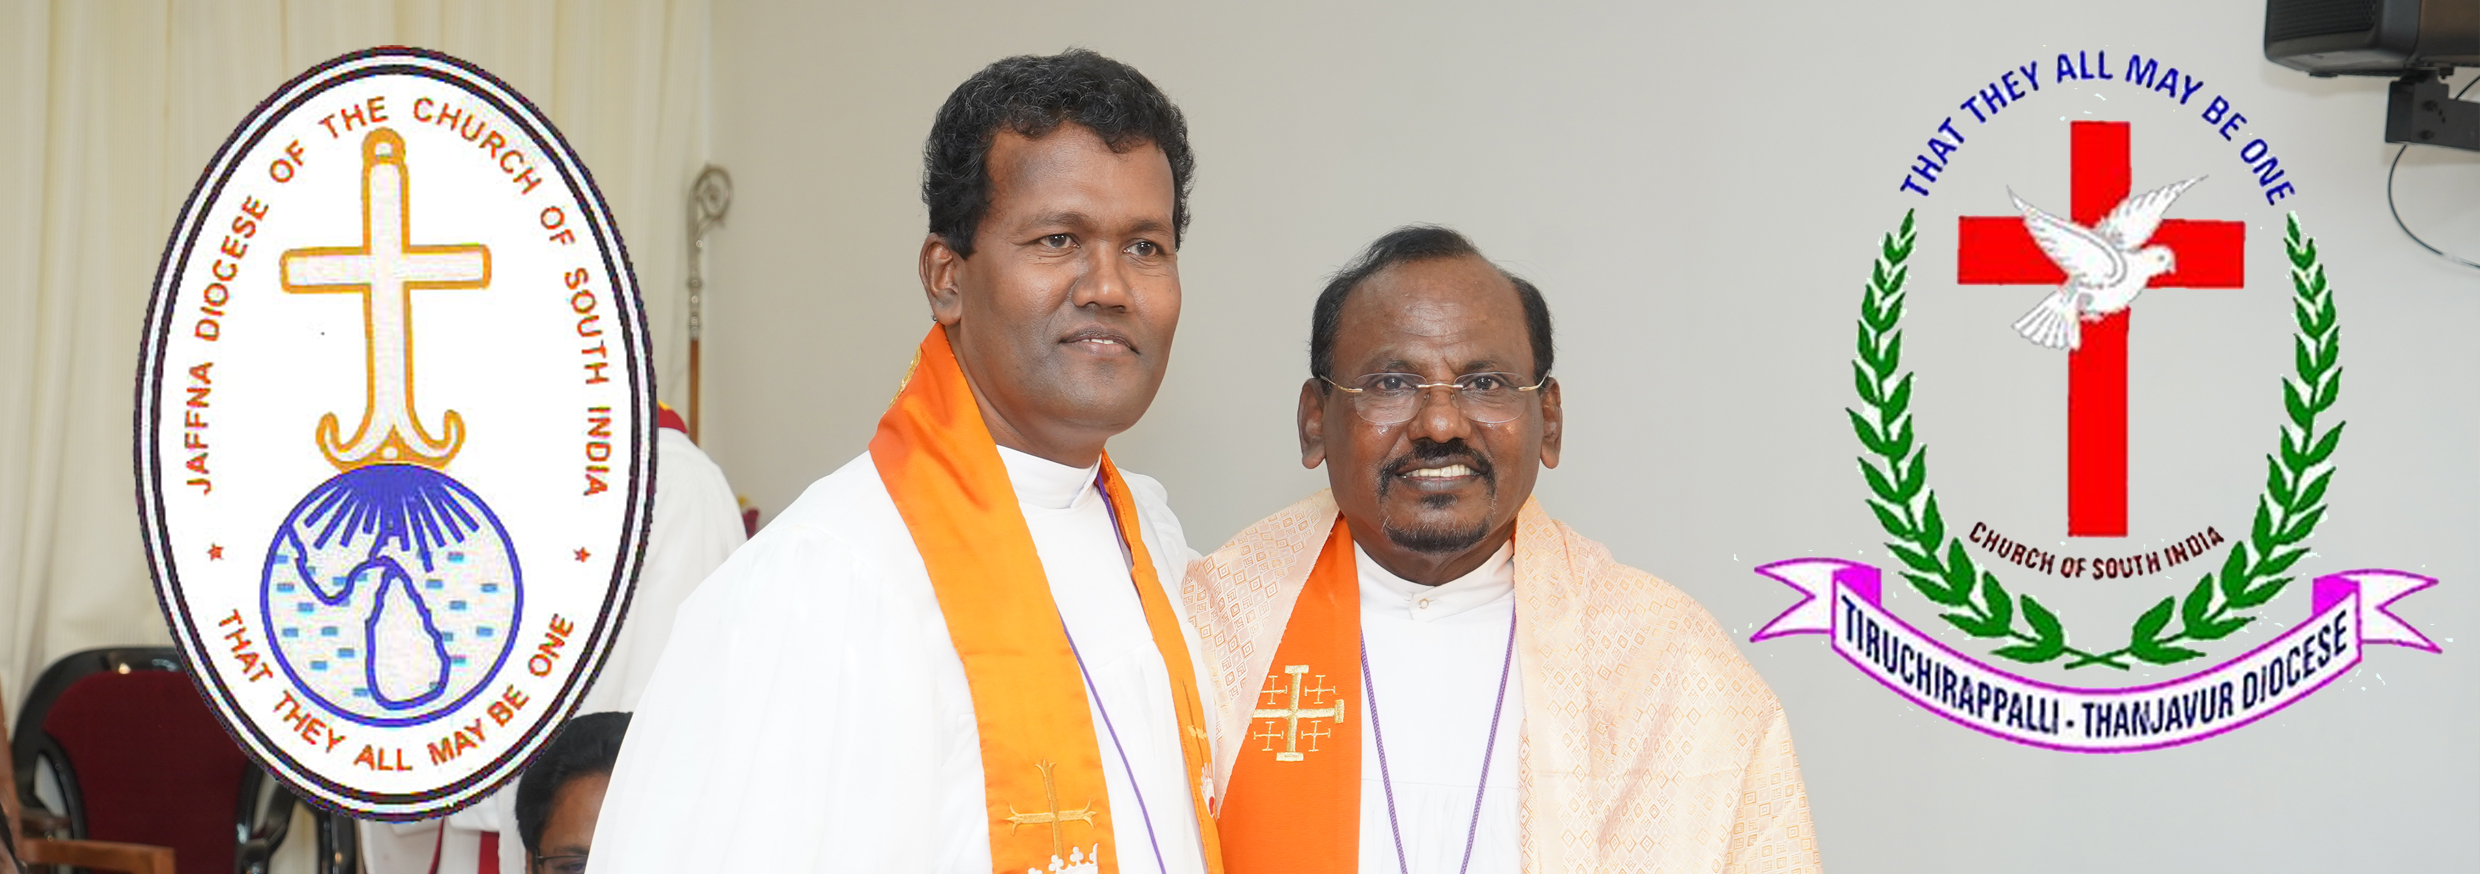 Bishop Chandrasekaran’s Visit Strengthens Ties with Jaffna Diocese post thumbnail image